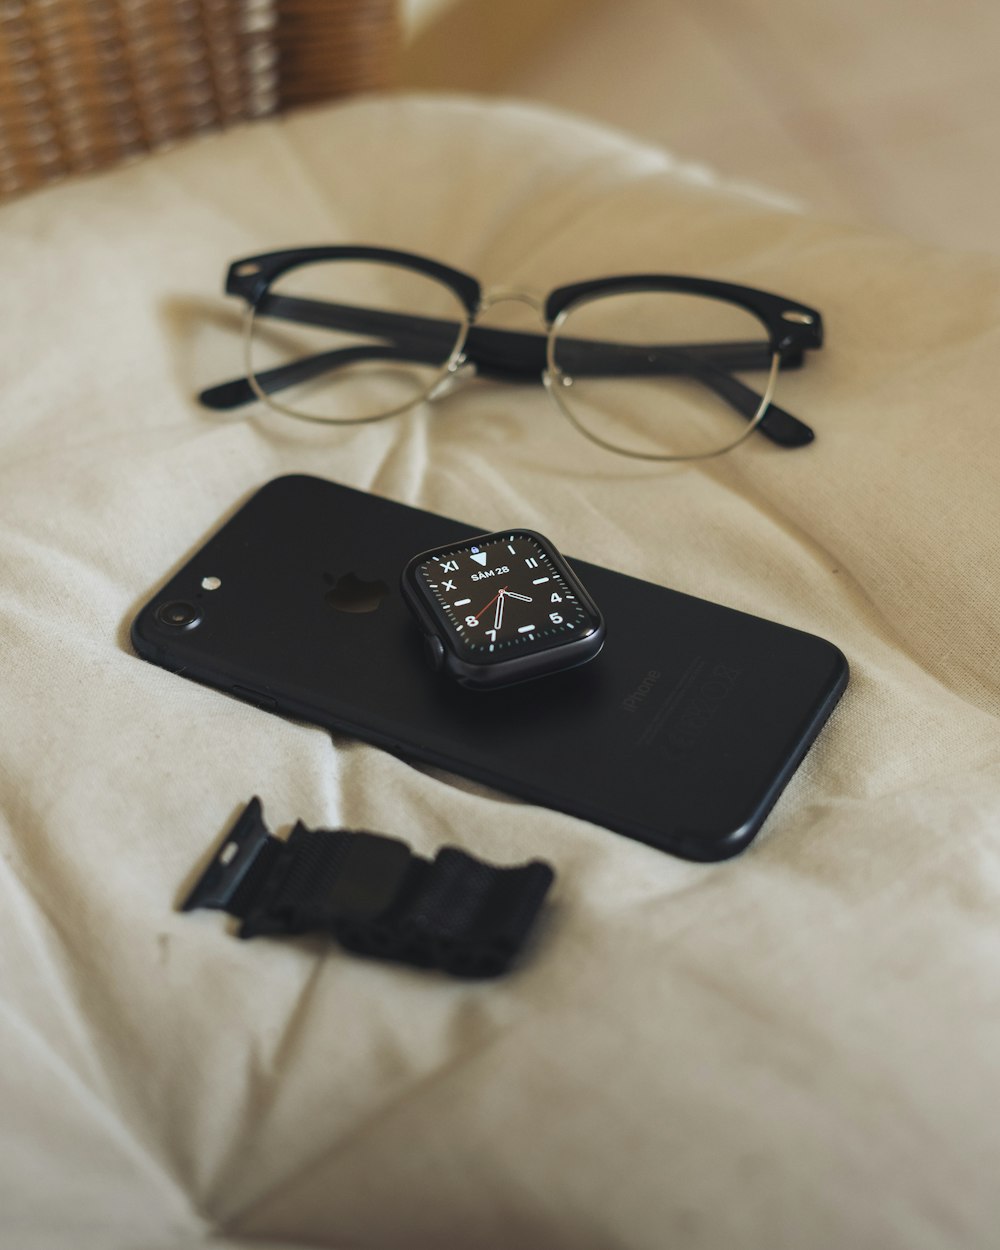 black iphone 4 on white textile